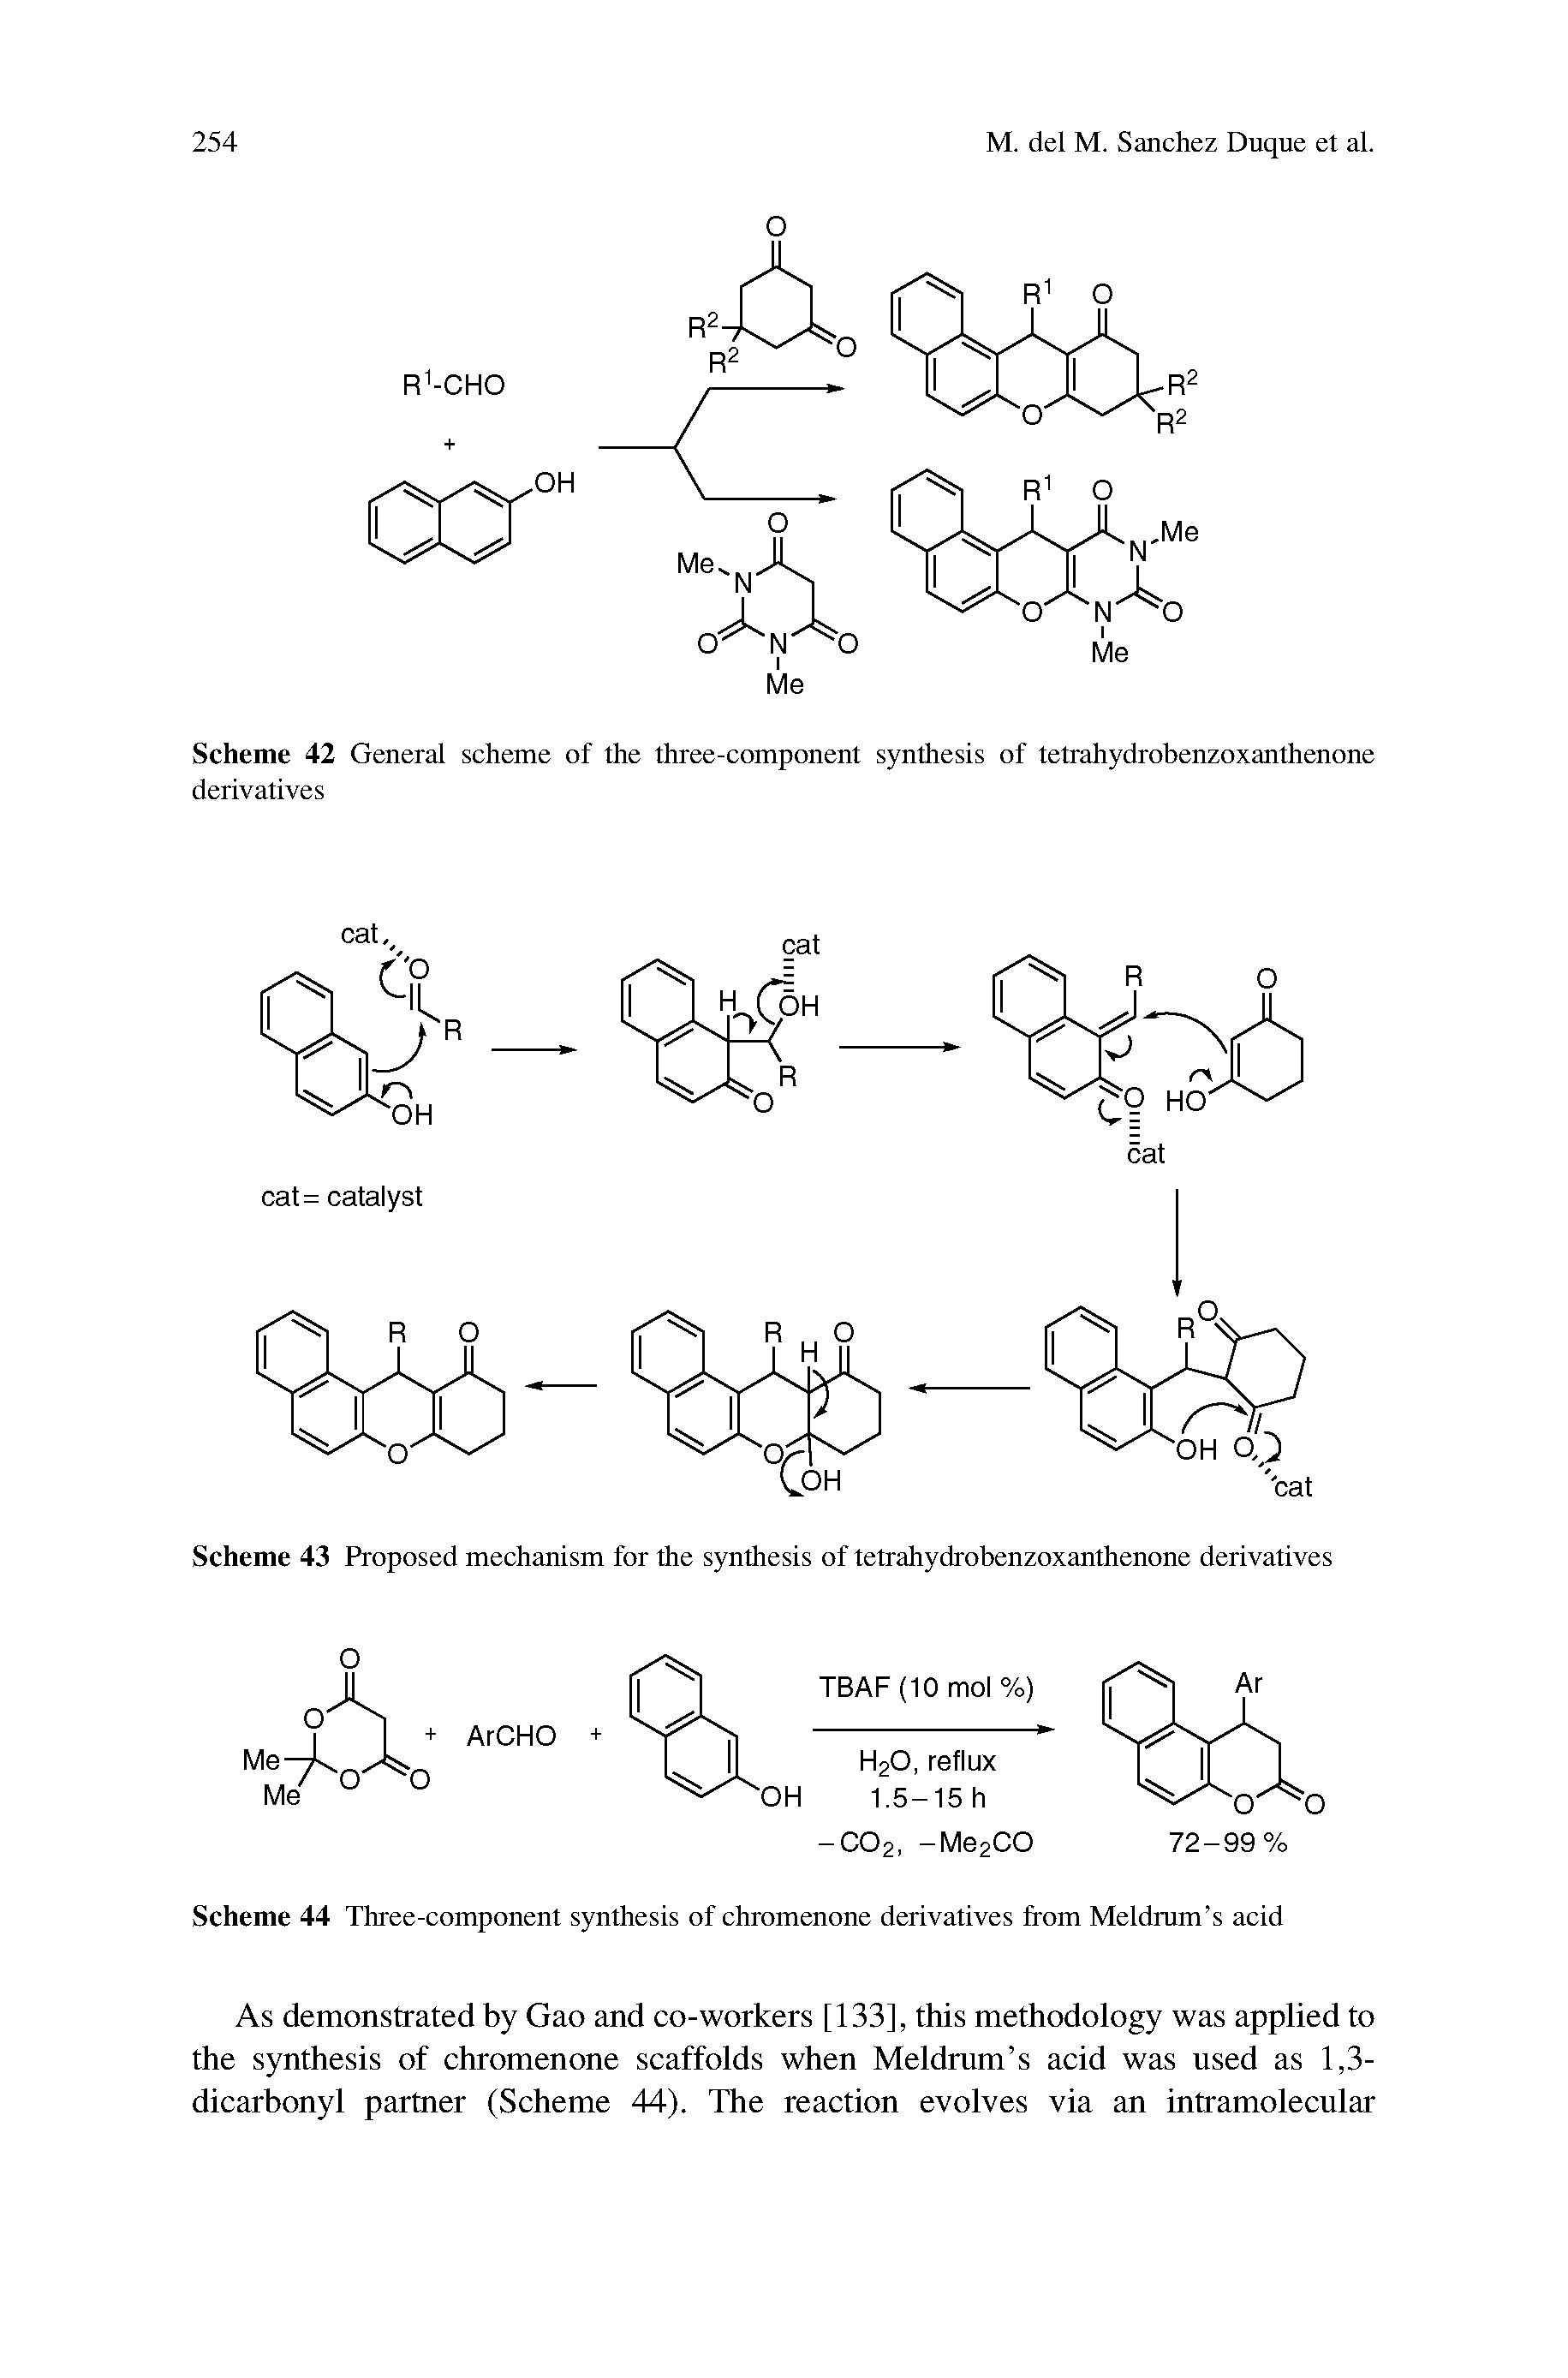 Scheme 44 Three-component synthesis of chromenone derivatives from Meldrum s acid...